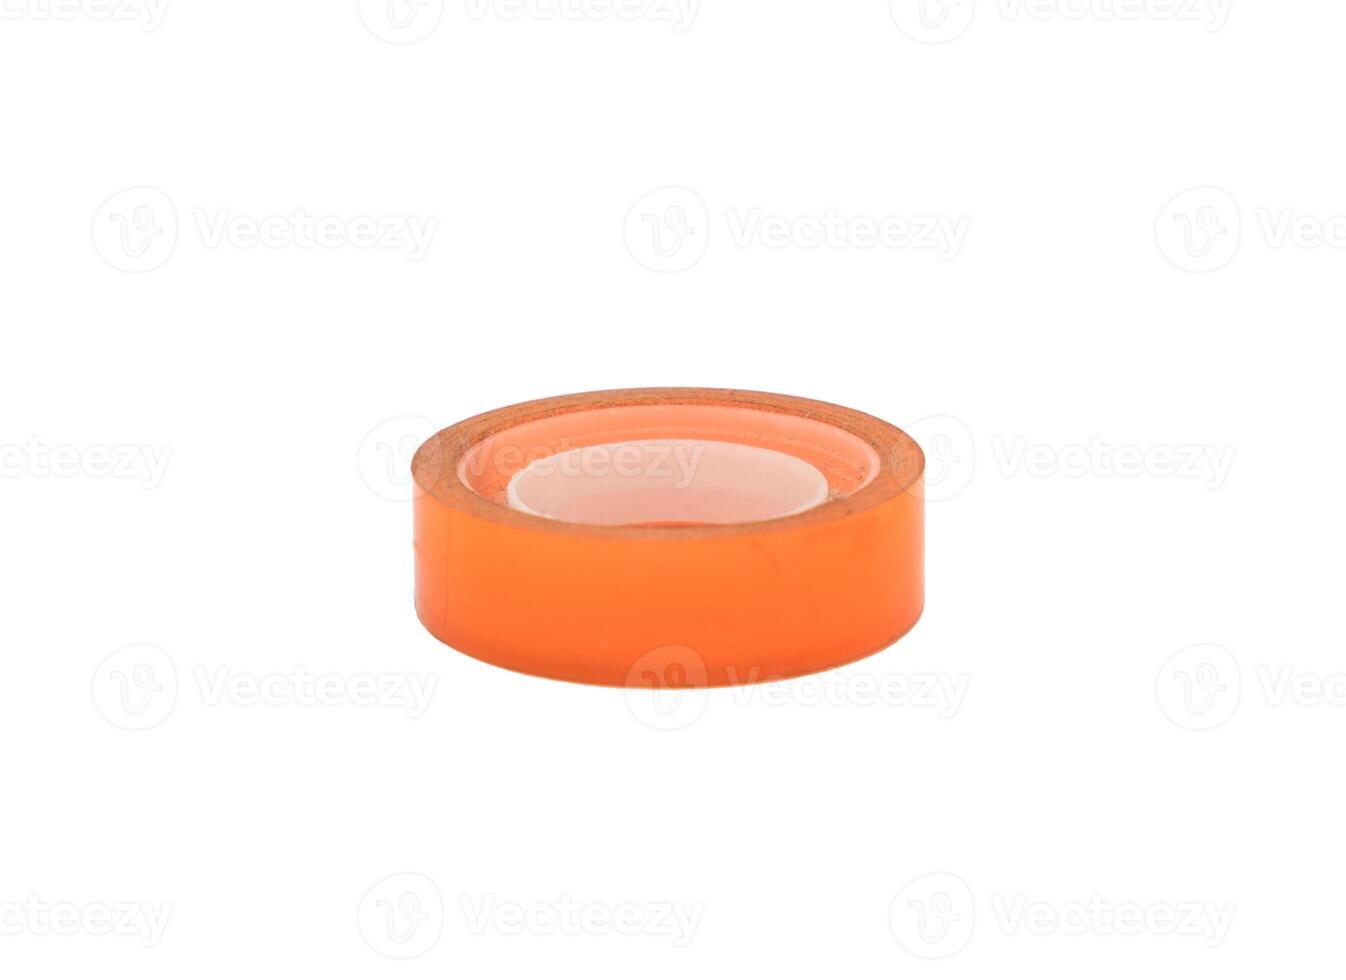 Scotch tape adhesive group colorful orange photo